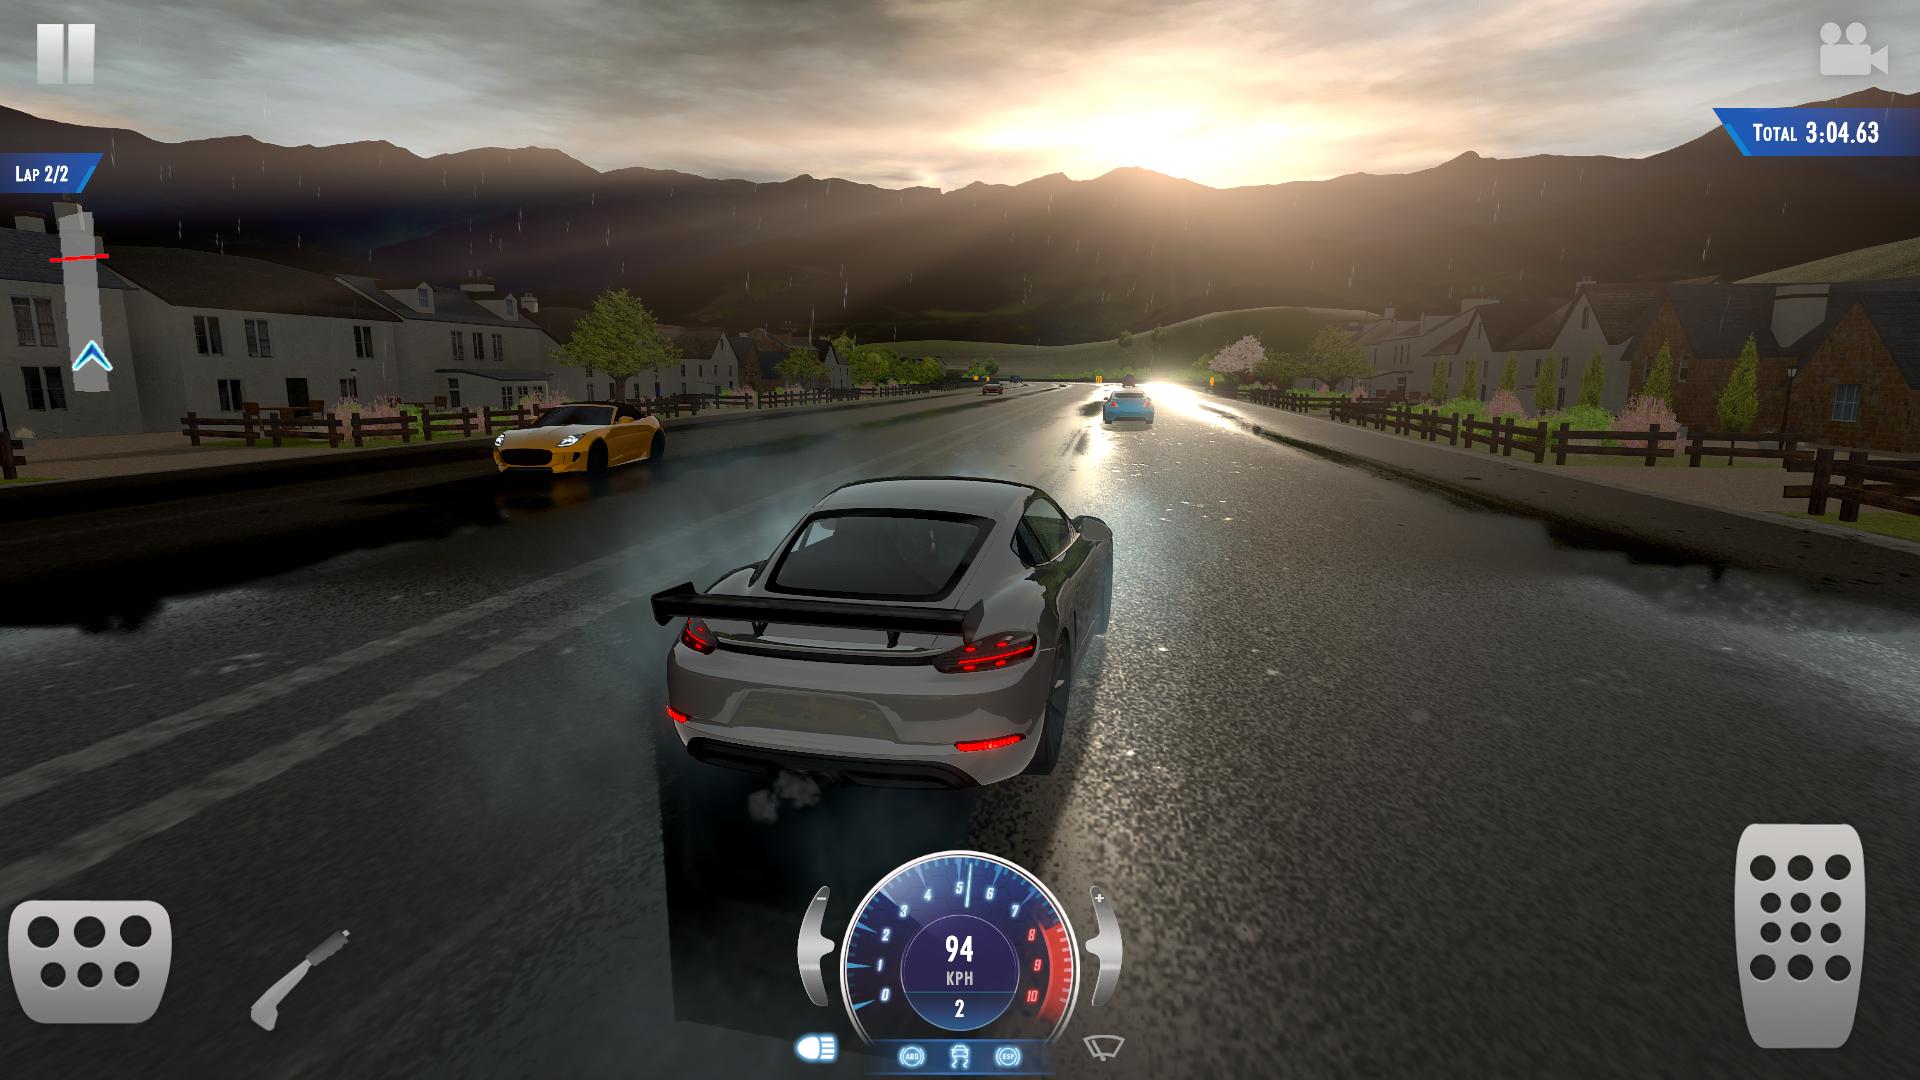 Racing Xperience Real Car Racing & Drifting Game 1.4.0 Screenshot 17